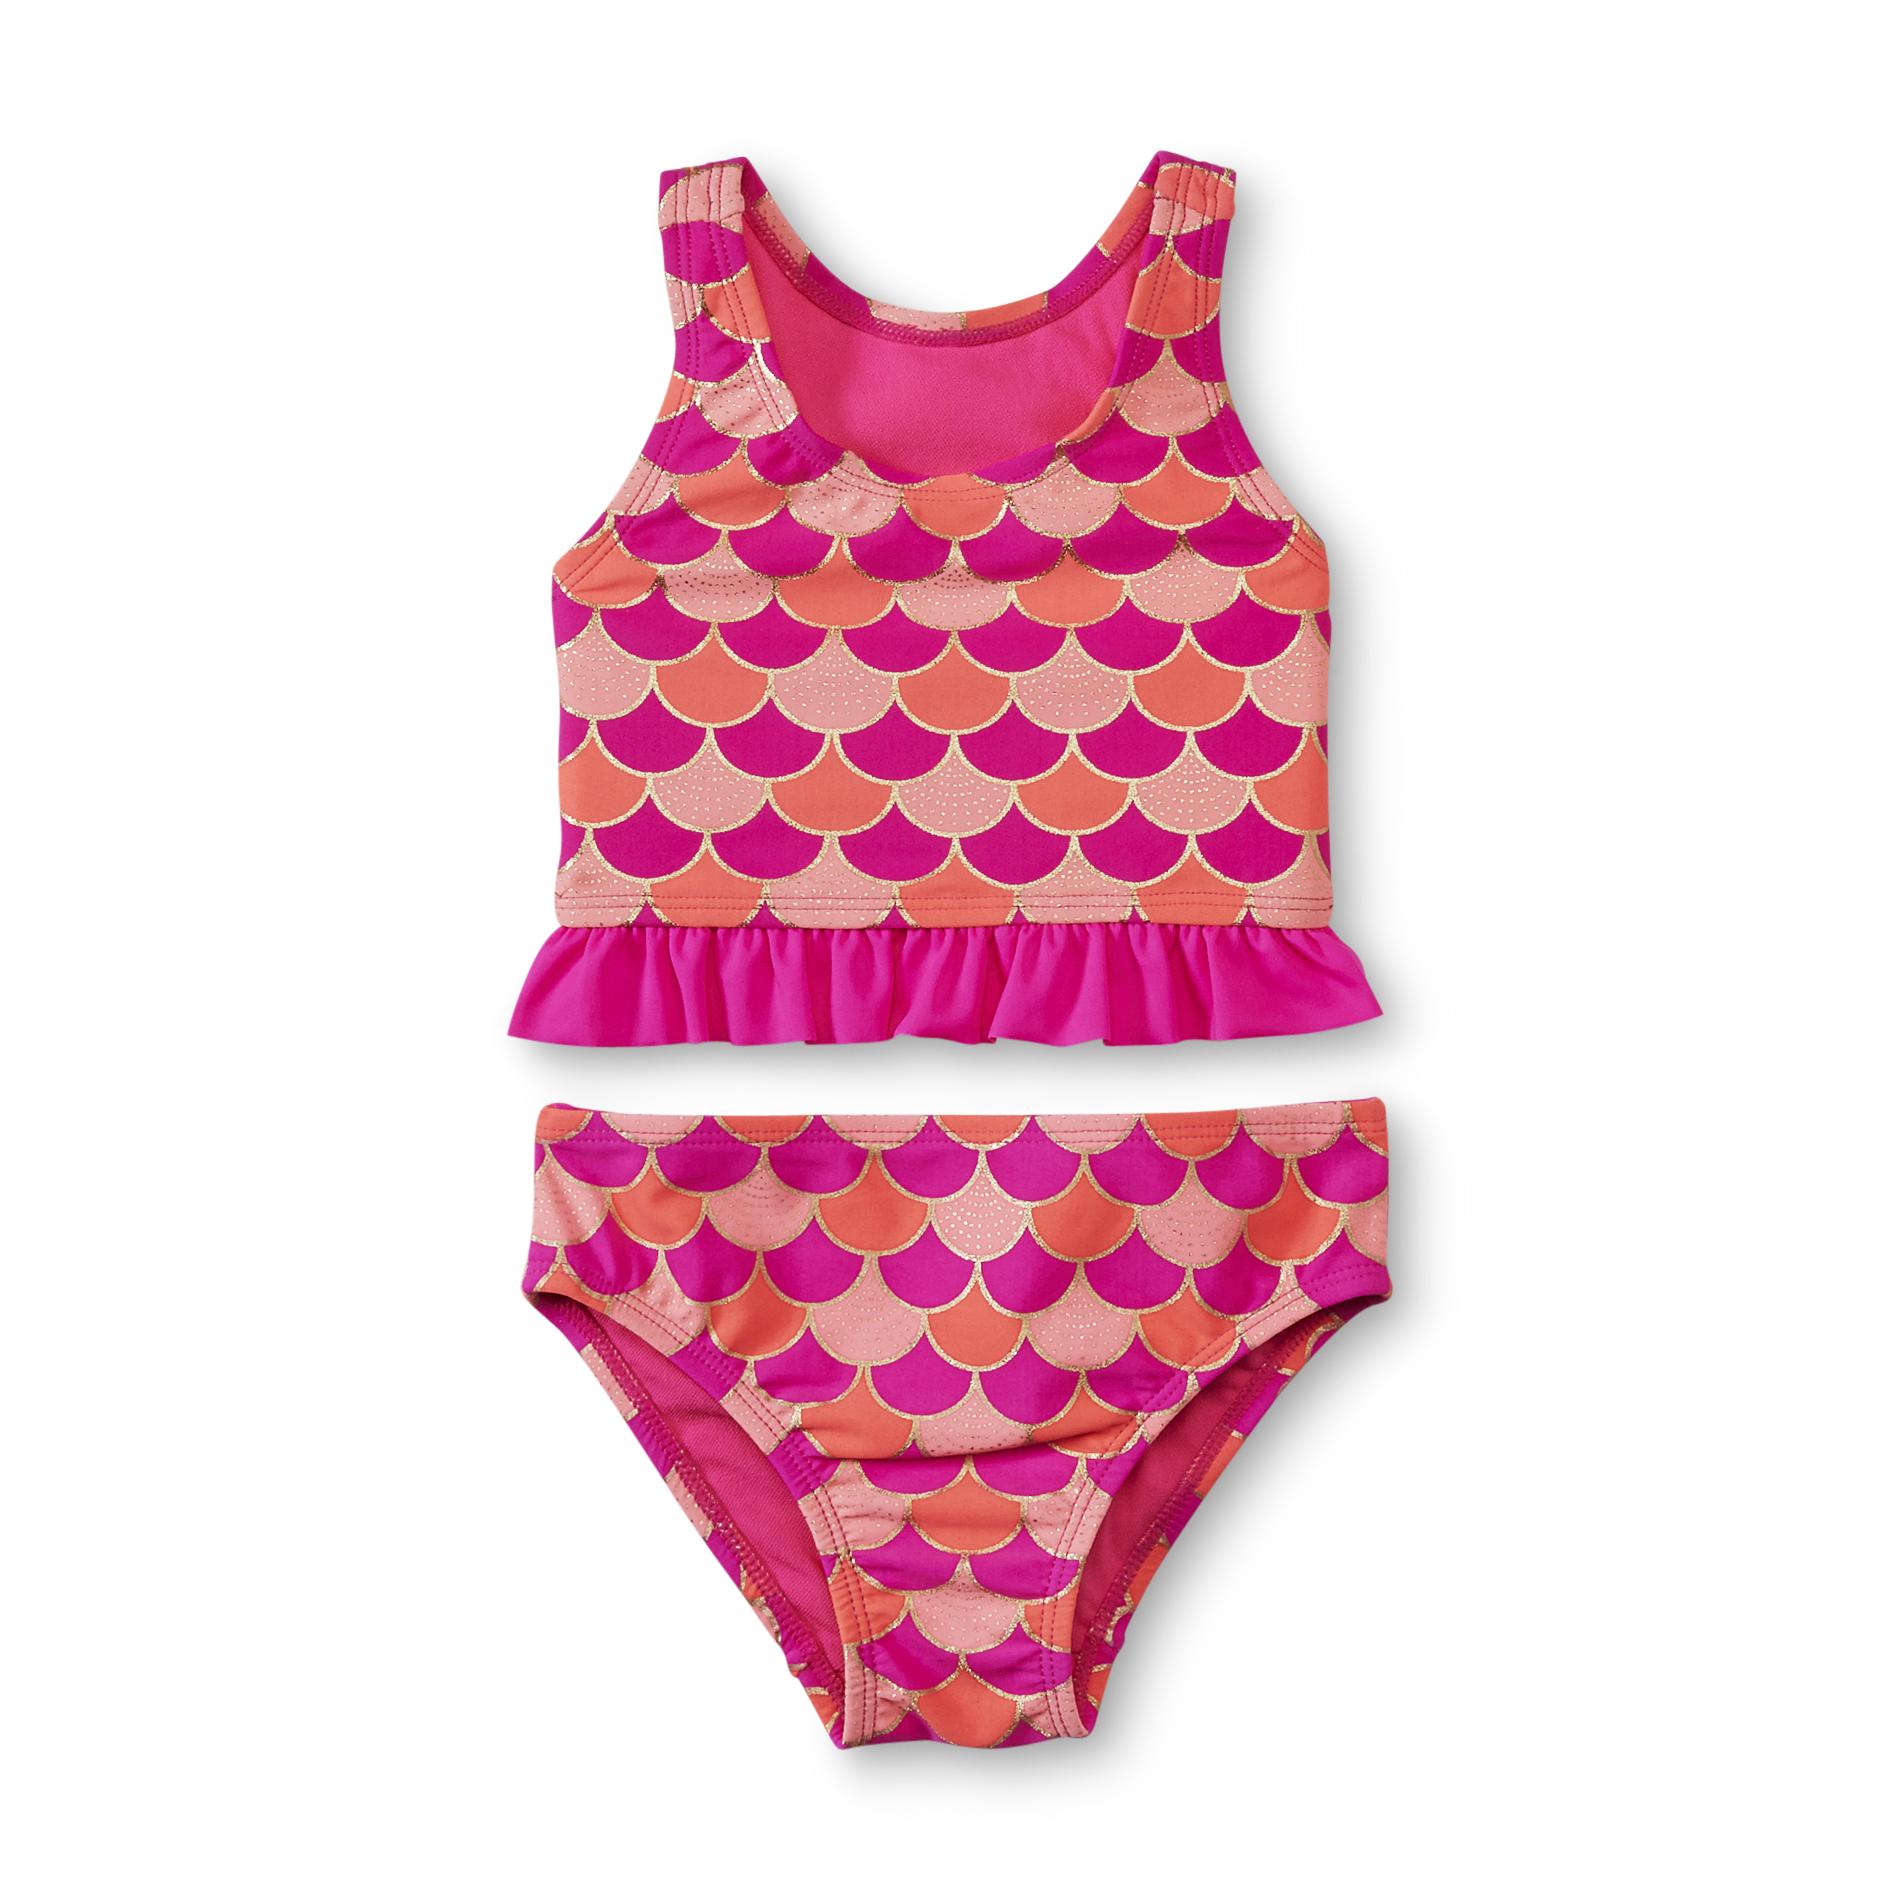 Joe Boxer Infant & Toddler Girl's Bikini - Mermaid Scales